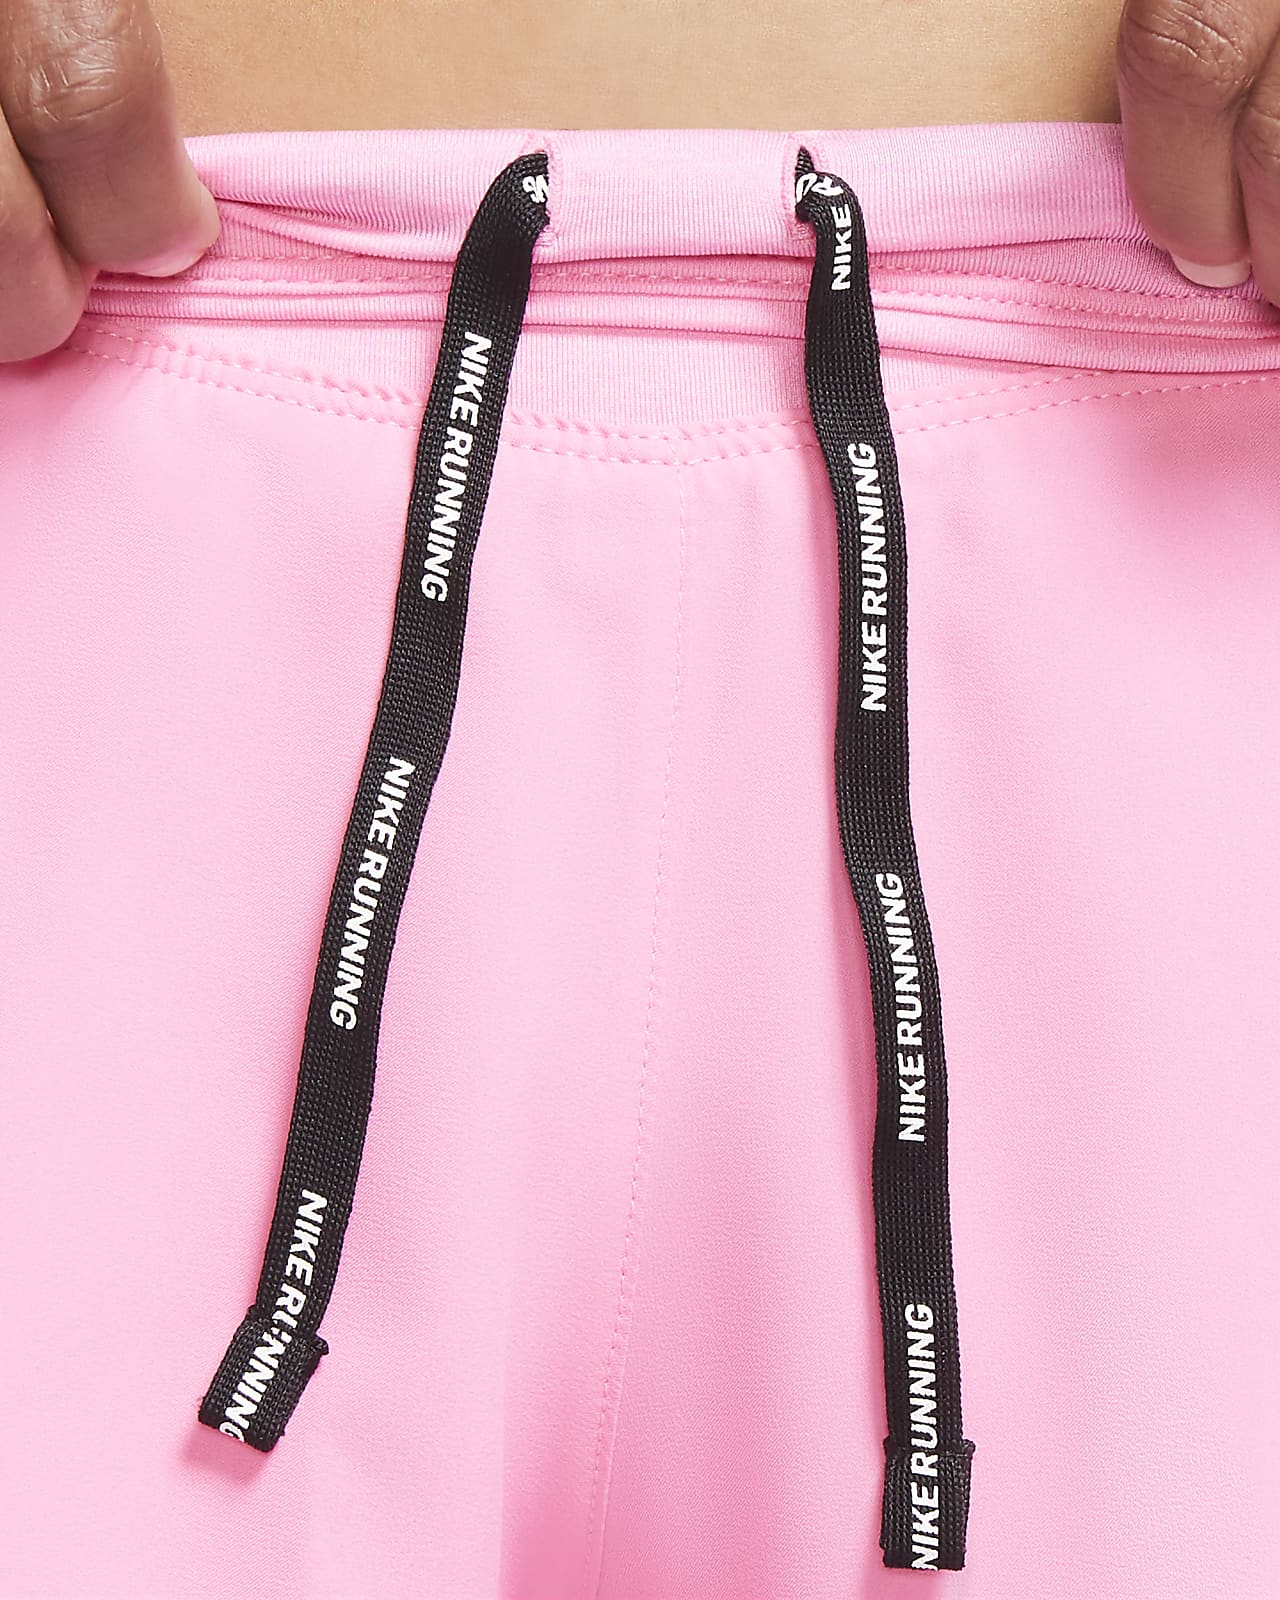 womens nike pink shorts